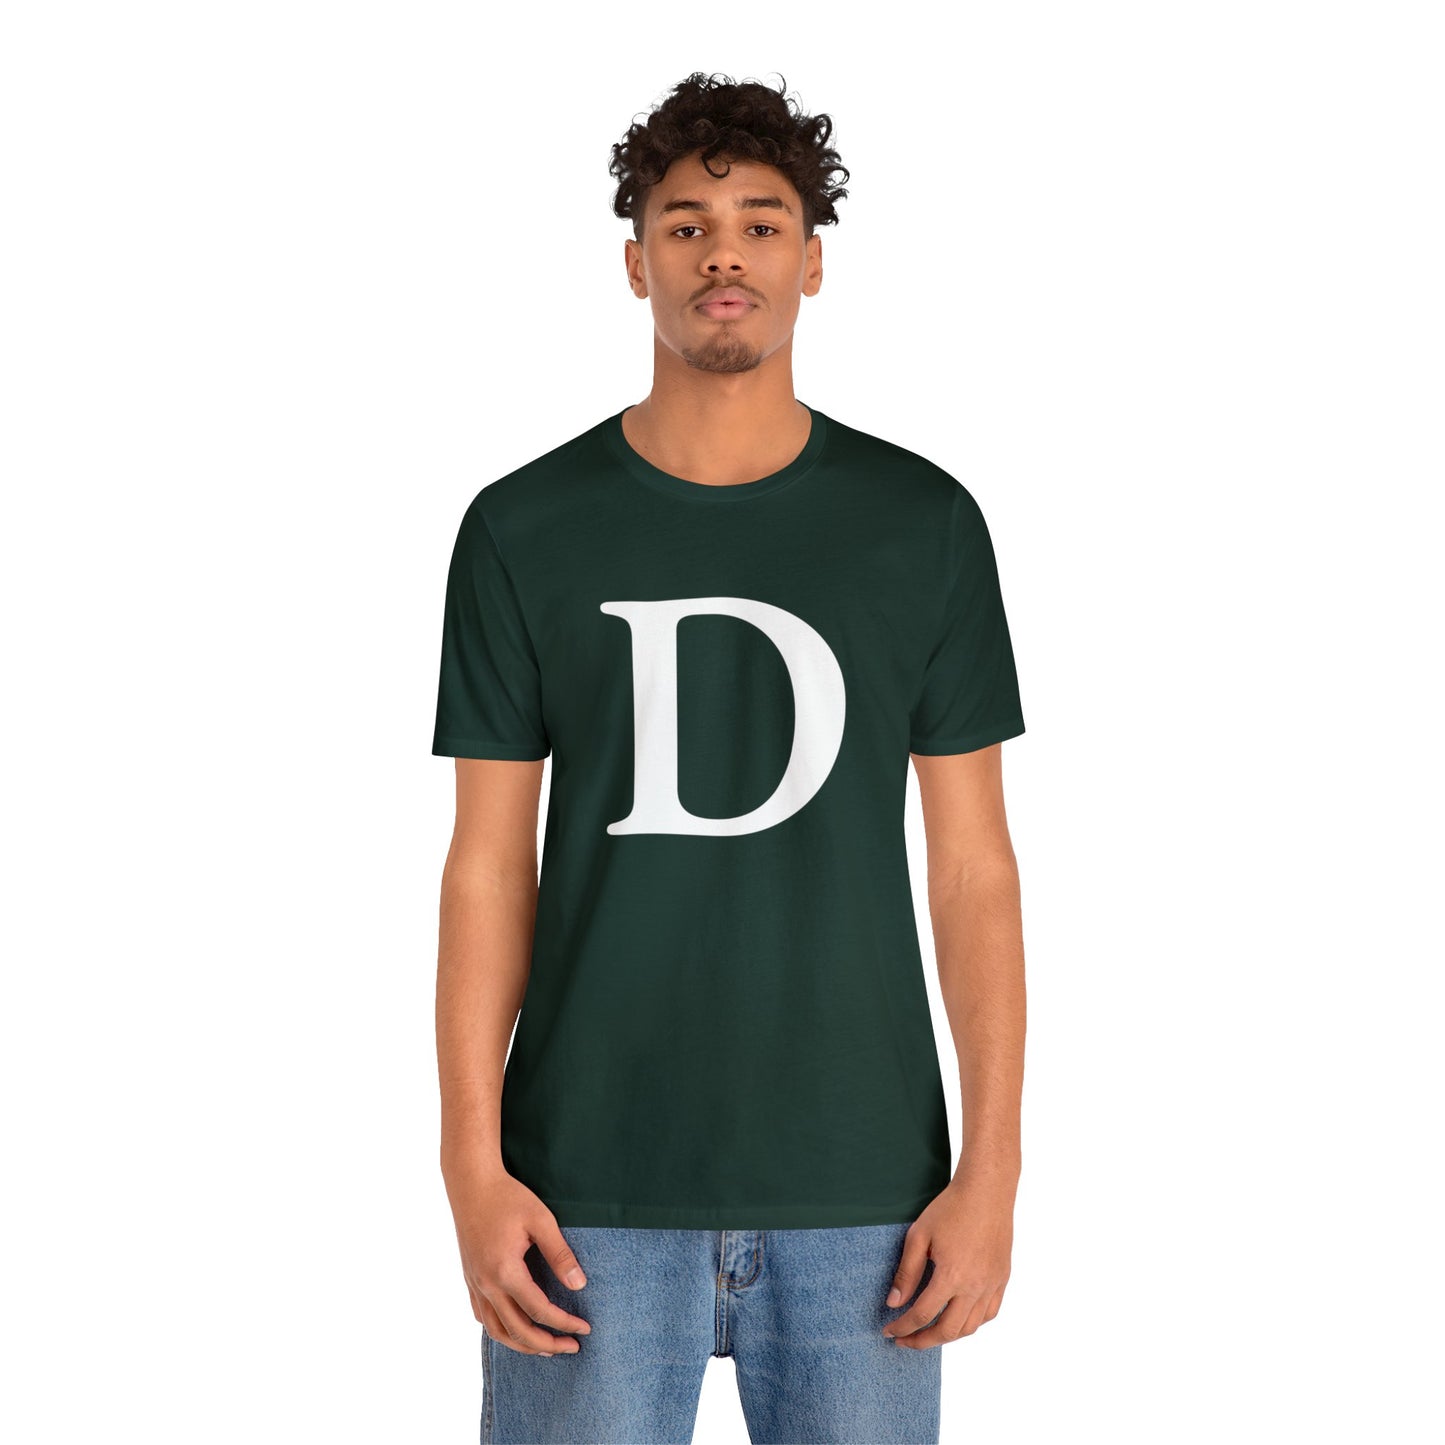 Detroit 'Old French D' T-Shirt | Unisex Standard Fit